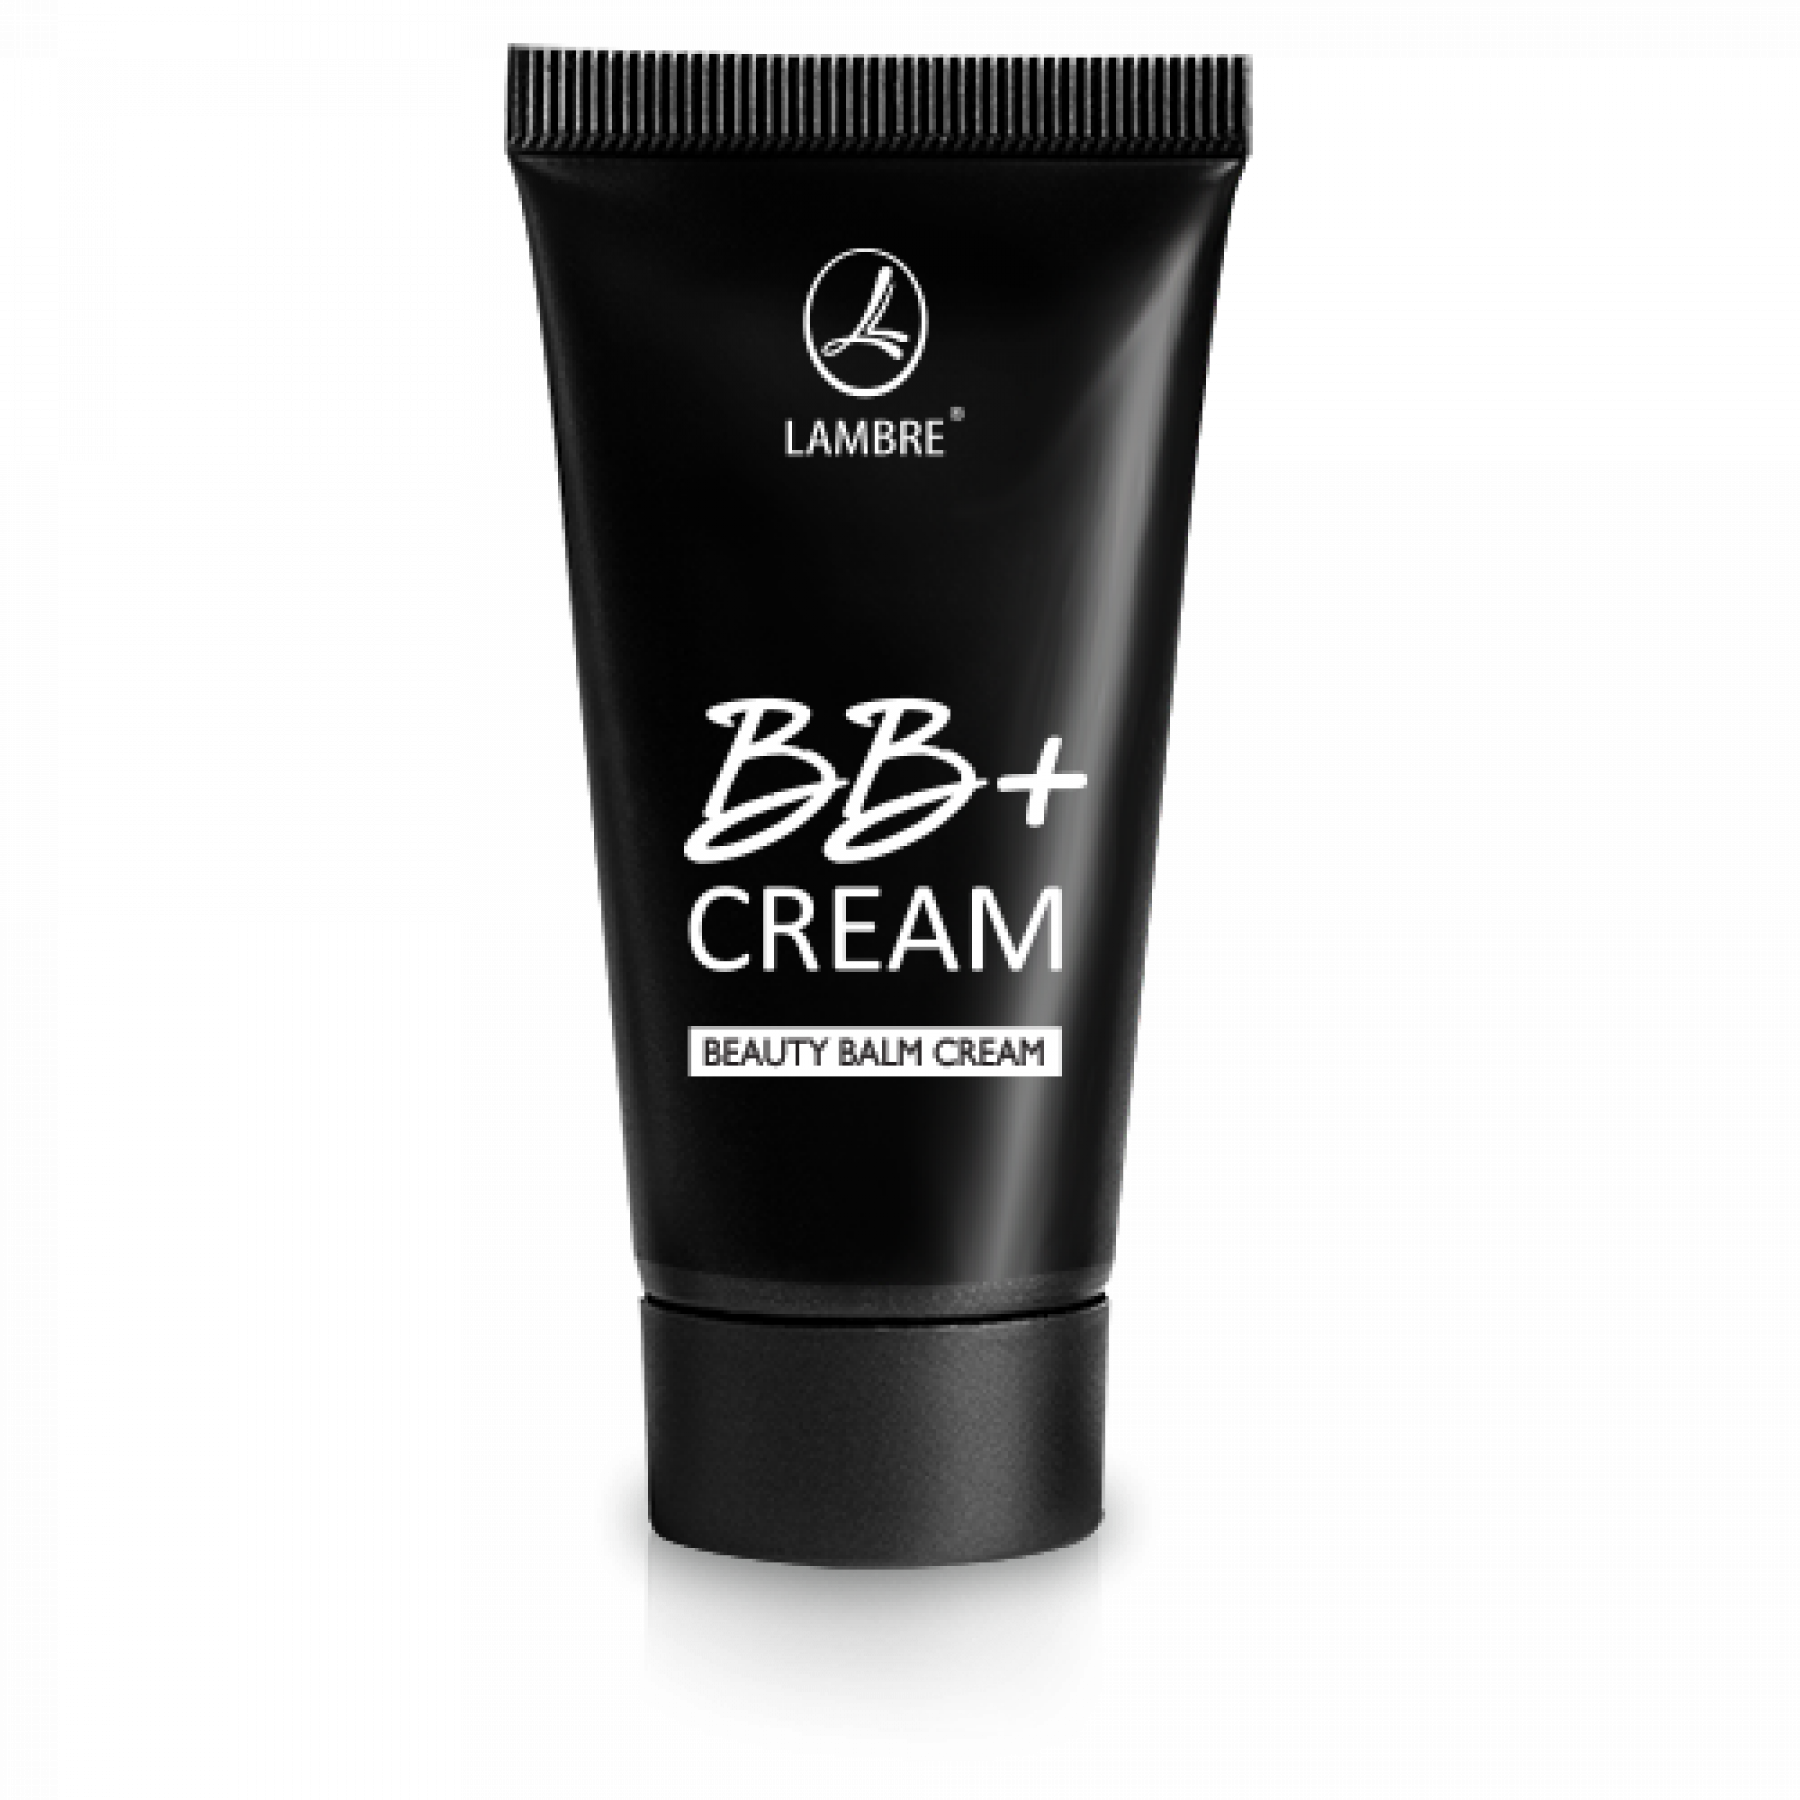 Bb+ cream 30ml light No1